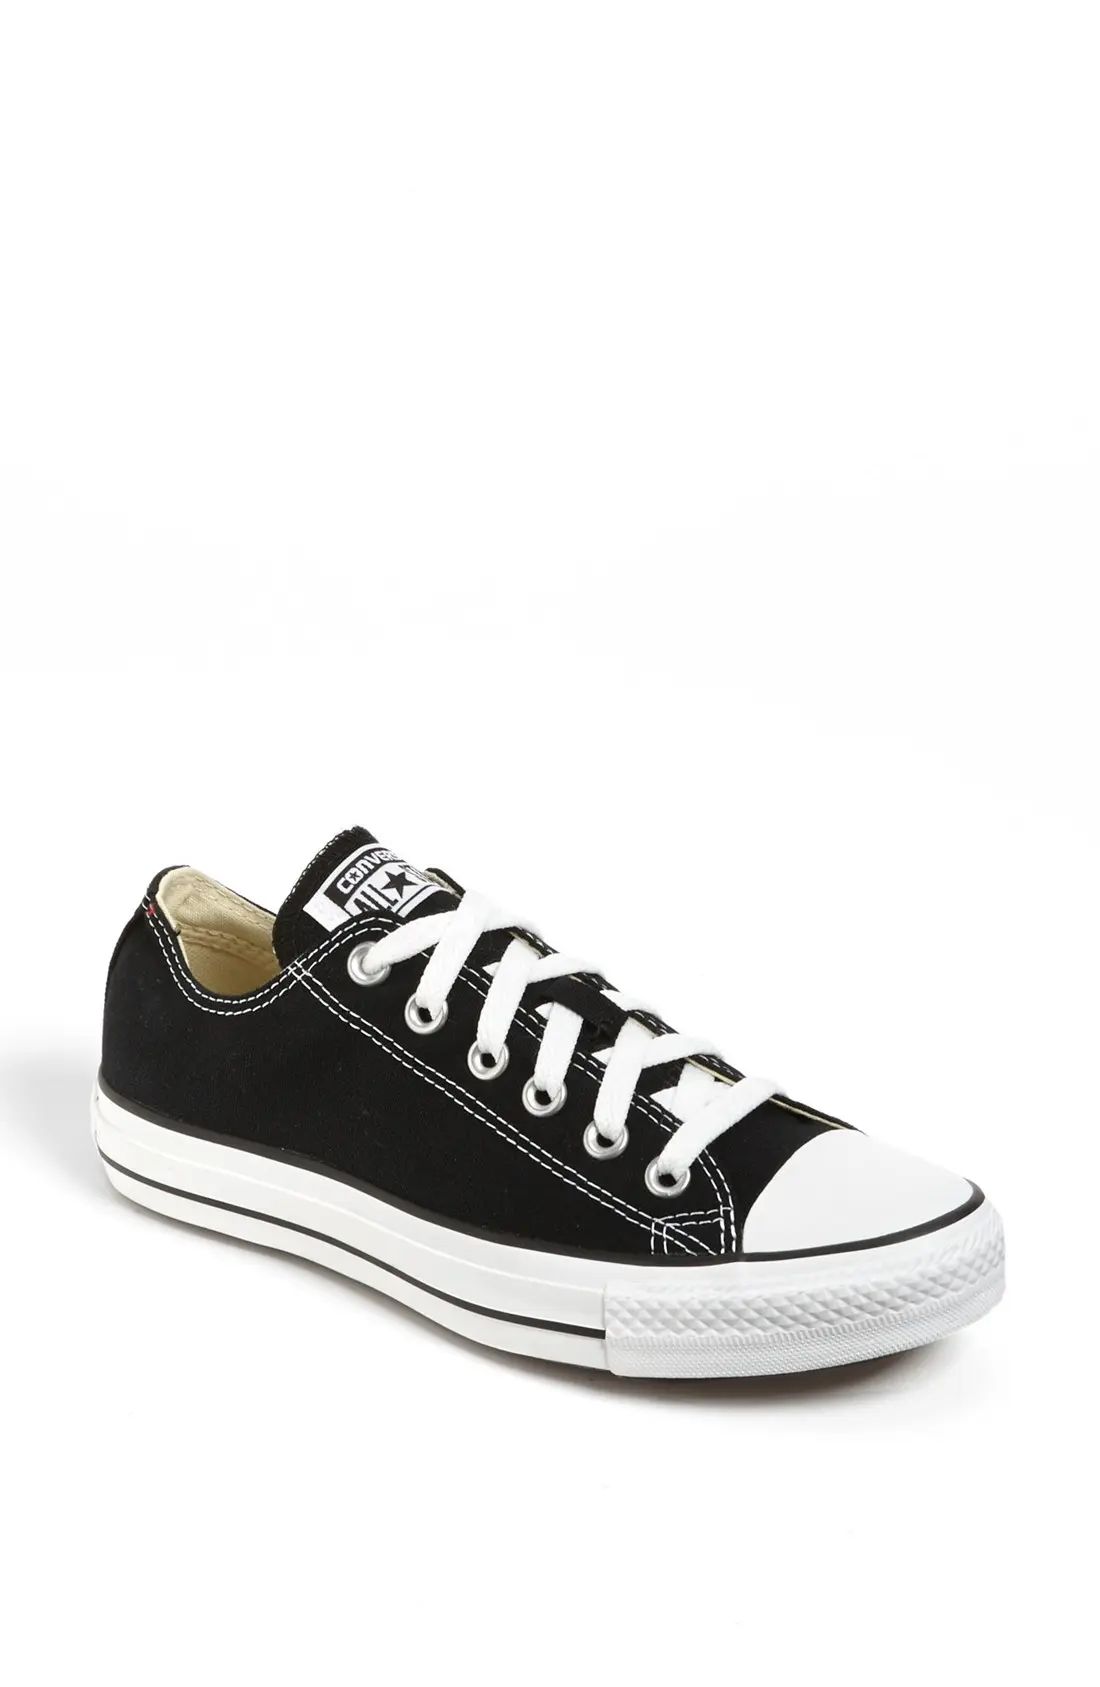 Women's Converse Chuck Taylor Low Top Sneaker, Size 5.5 M - Black | Nordstrom